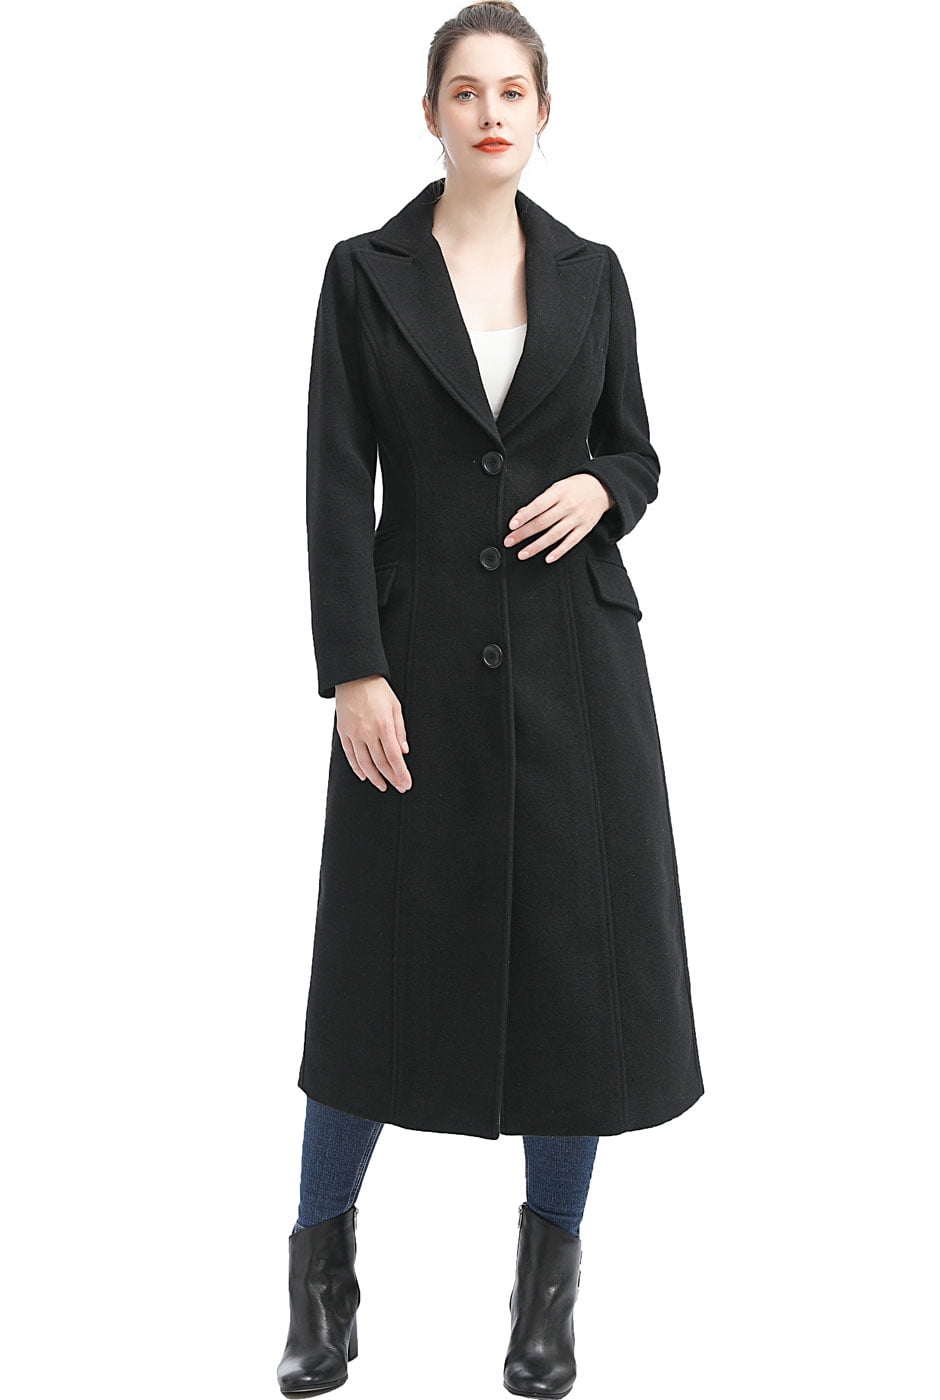 Regular & Plus Size & Petite BGSD Womens Bri Long Wool Pea Coat 